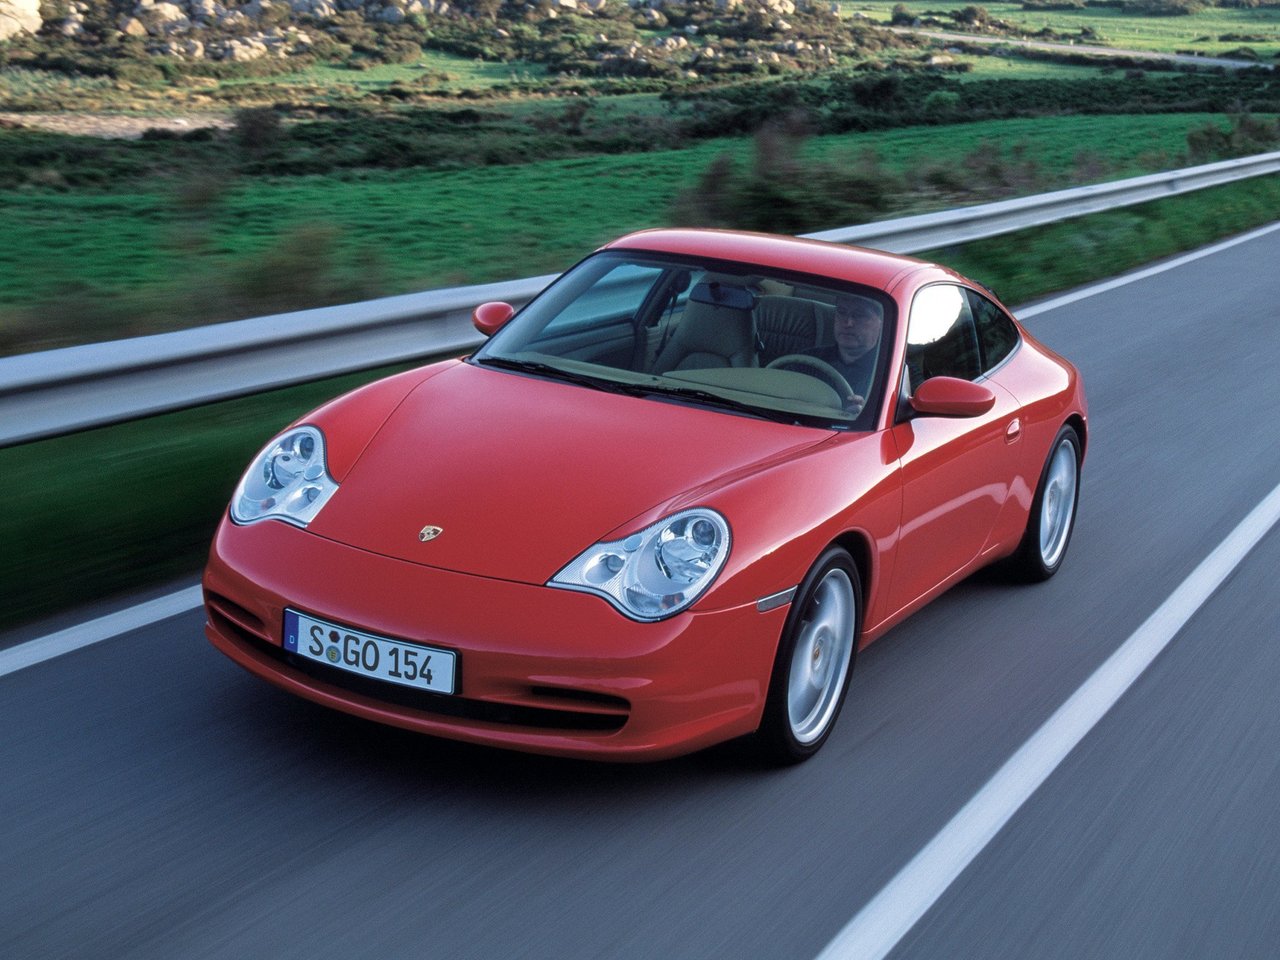 Расход газа трёх комплектаций купе Porsche 911. Разница стоимости заправки газом и бензином. Автономный пробег до и после установки ГБО.